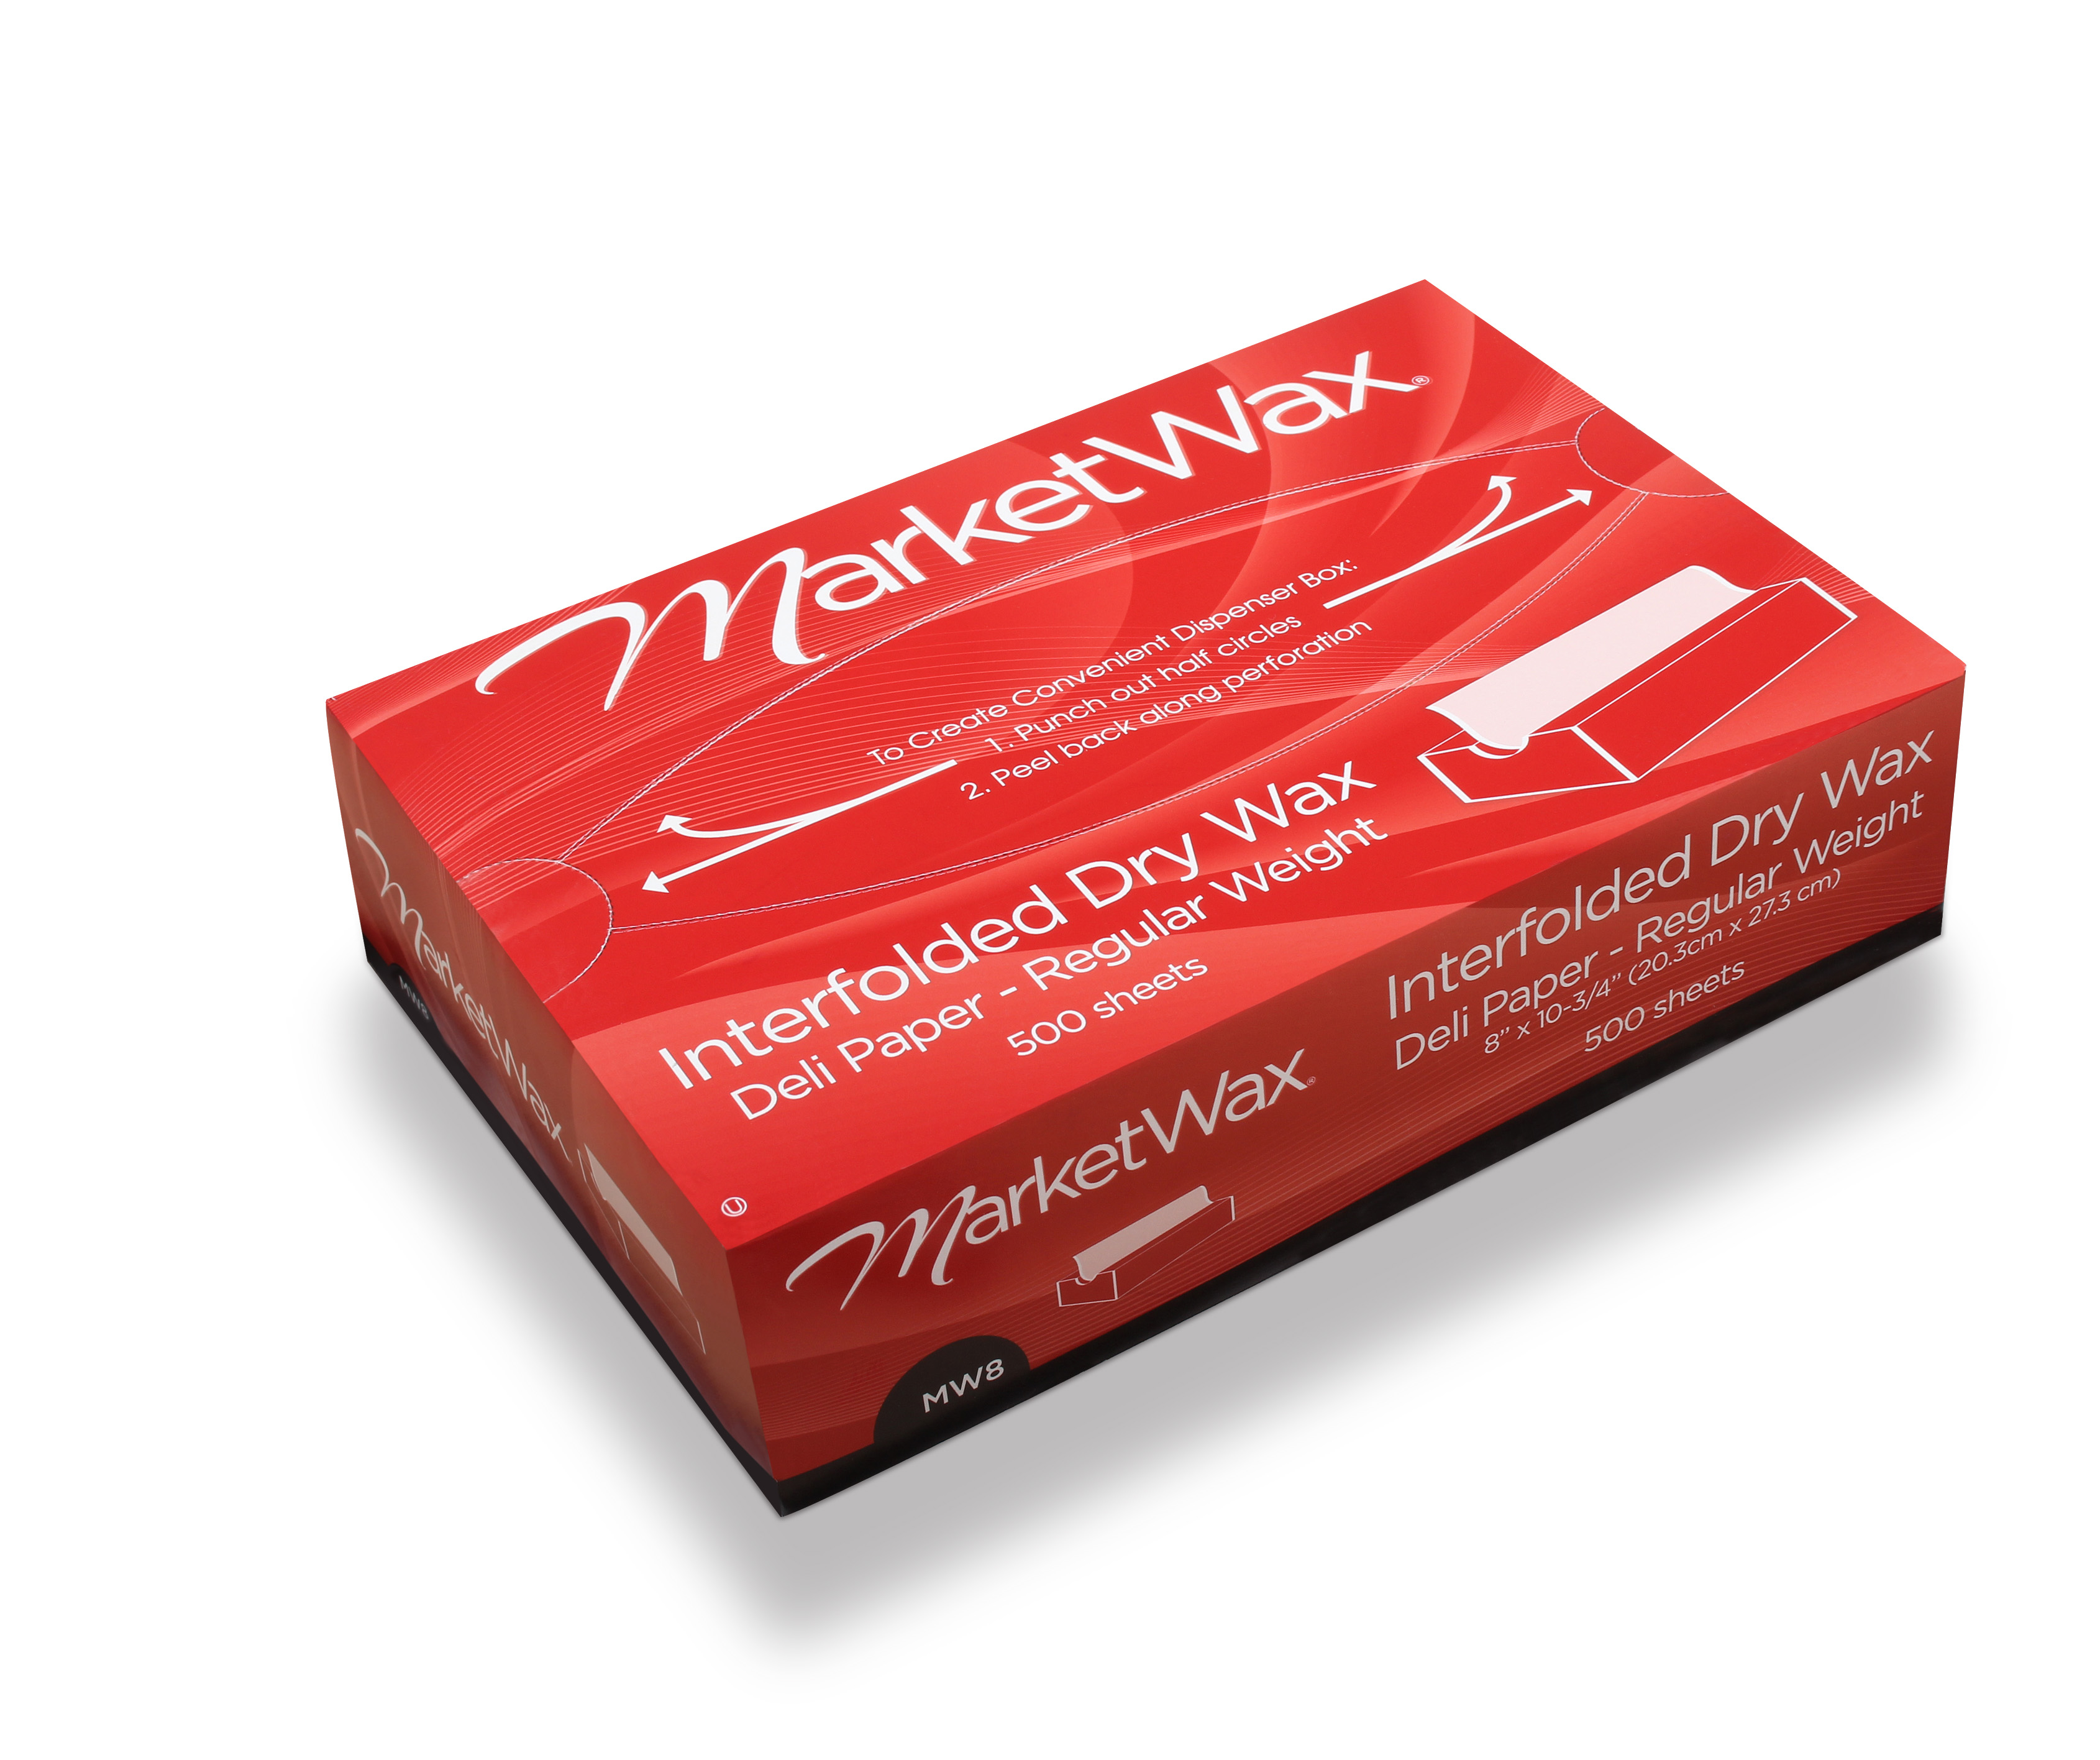 011006 MW6 MarketWax 6&quot; x
10.75&quot; Interfolded Dry Wax
Deli Sheets - 6000(12/500)